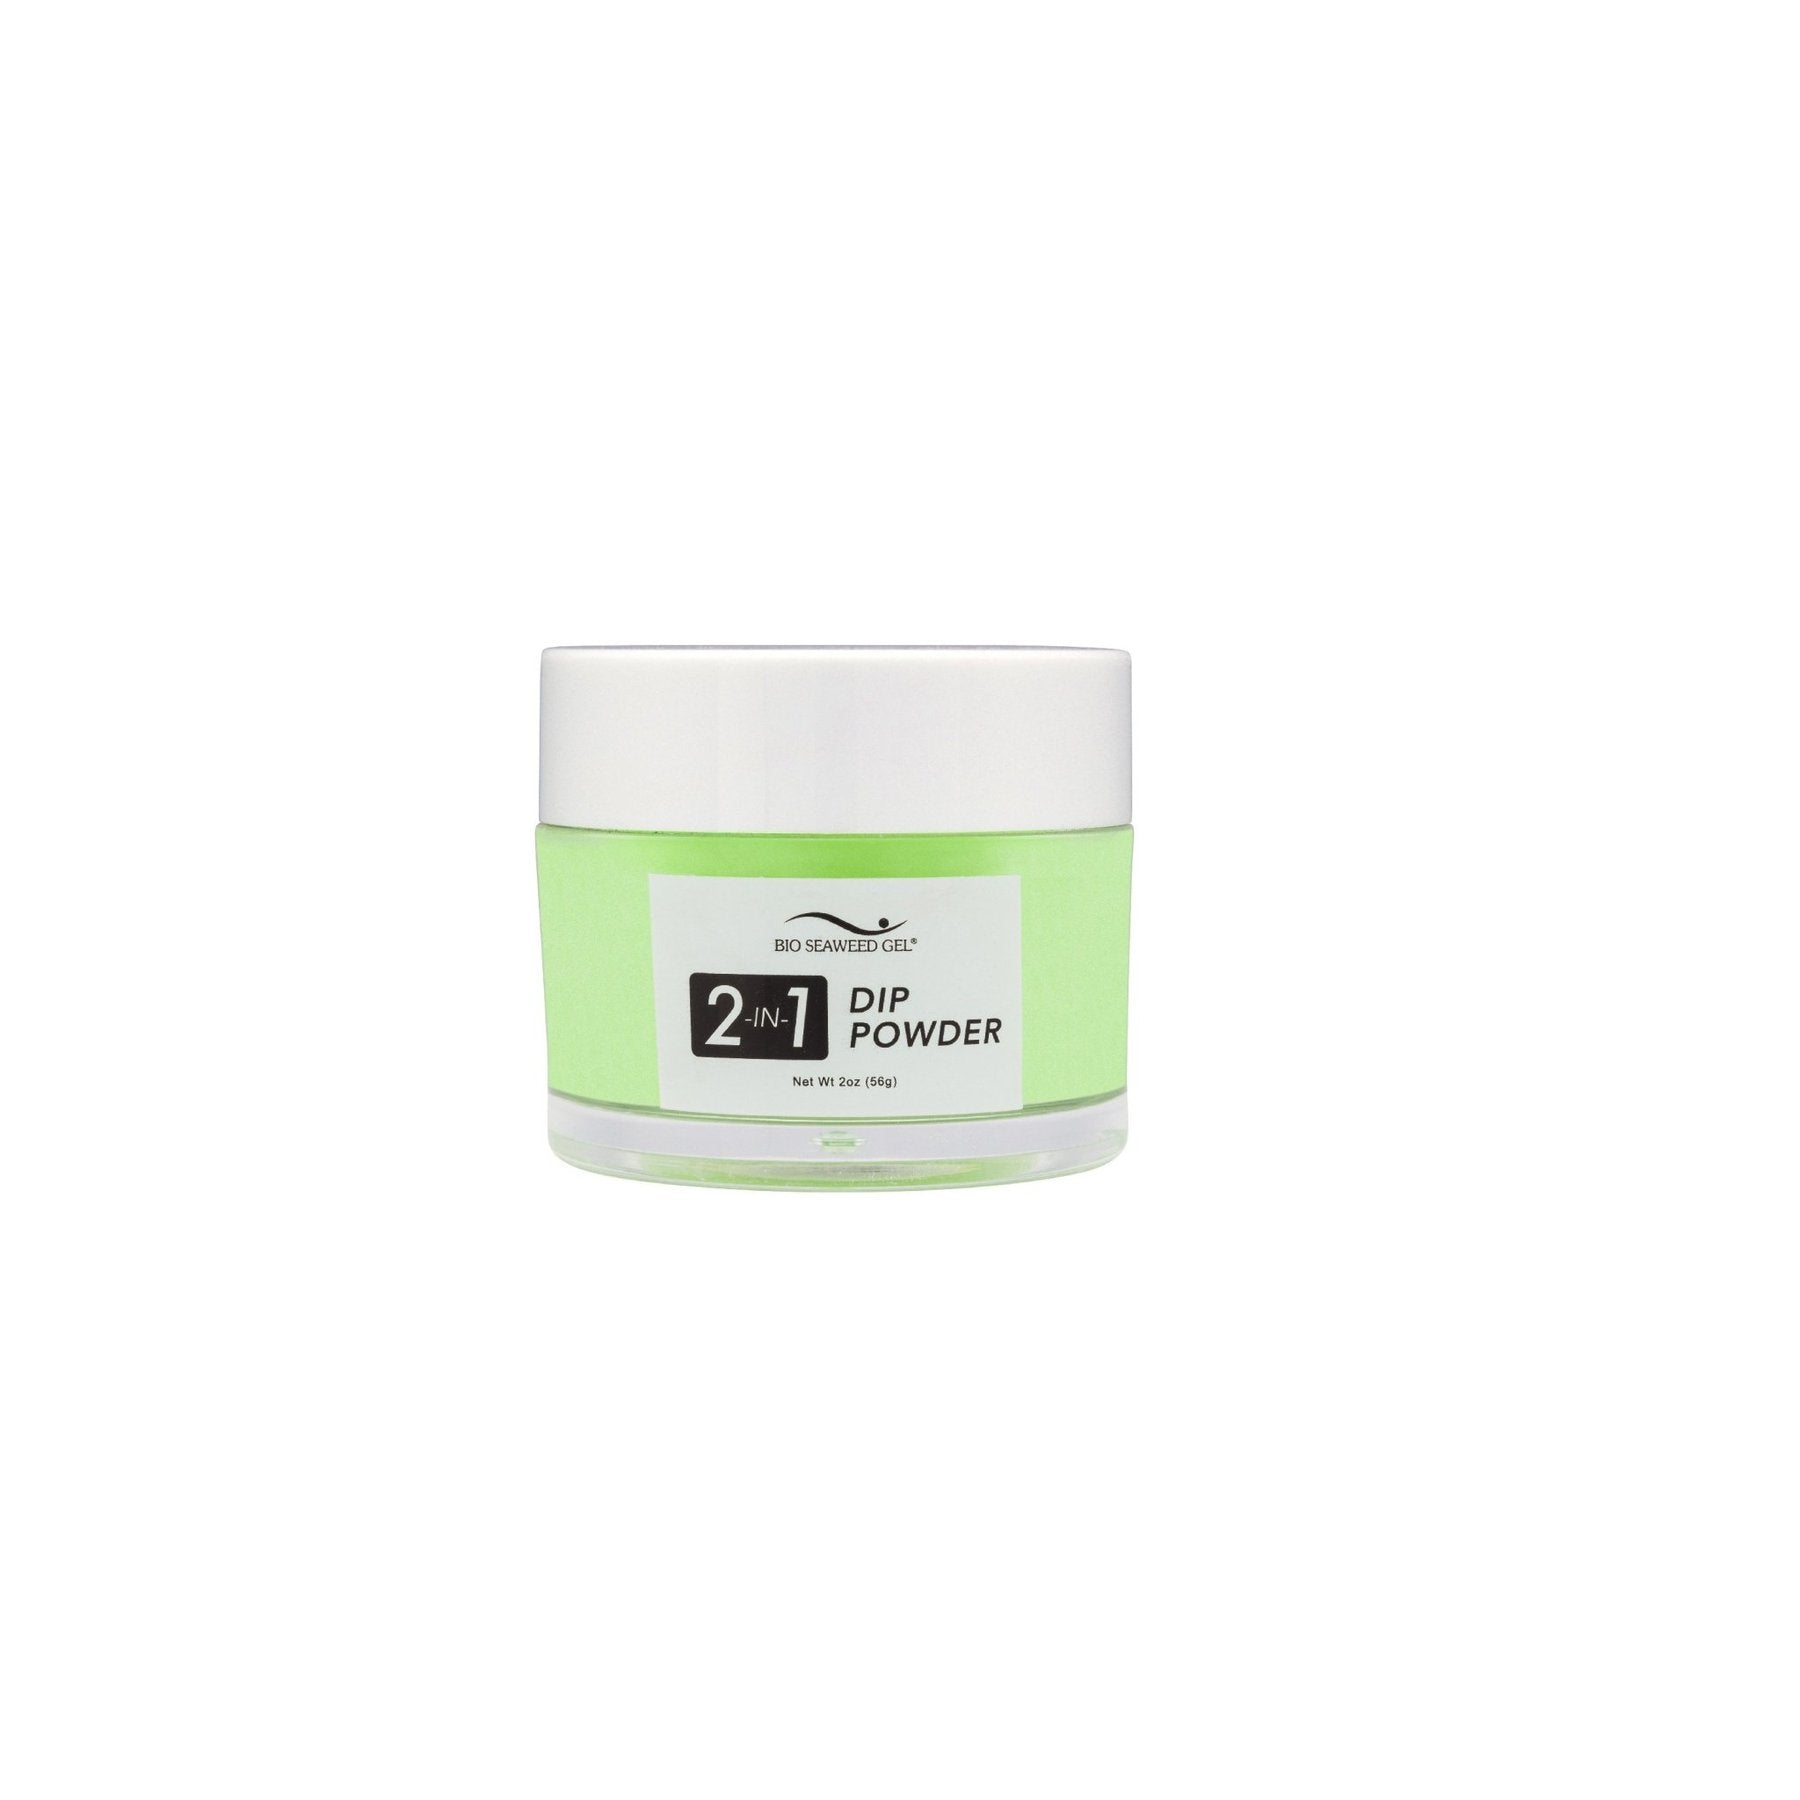 68 KIWI | Bio Seaweed Gel® Dip Powder System - CM Nails & Beauty Supply